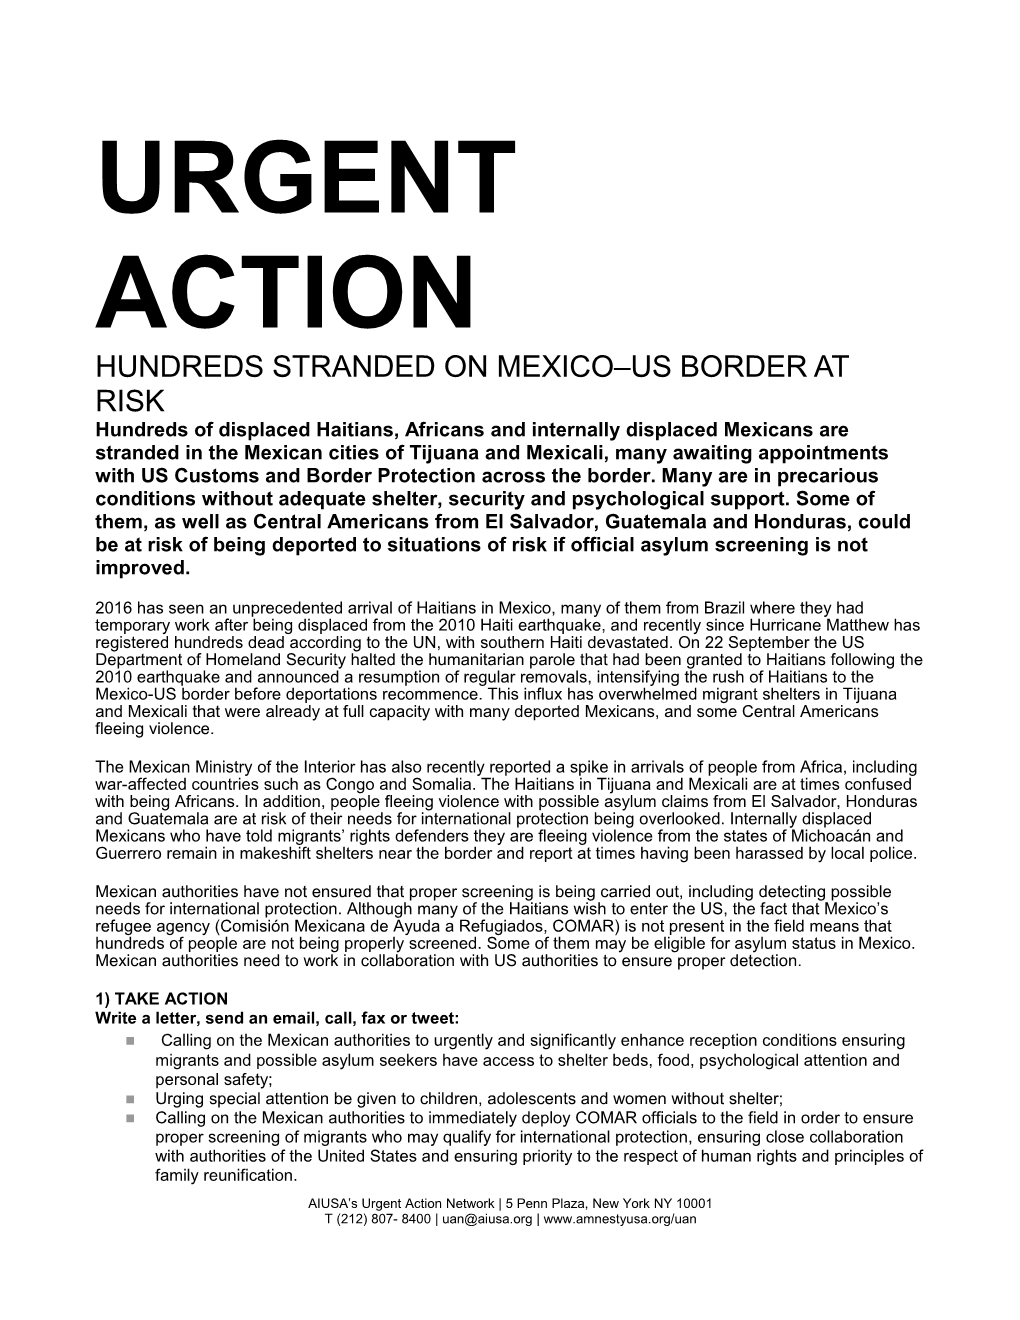 Hundreds STRANDED on MEXICO US BORDER at Risk